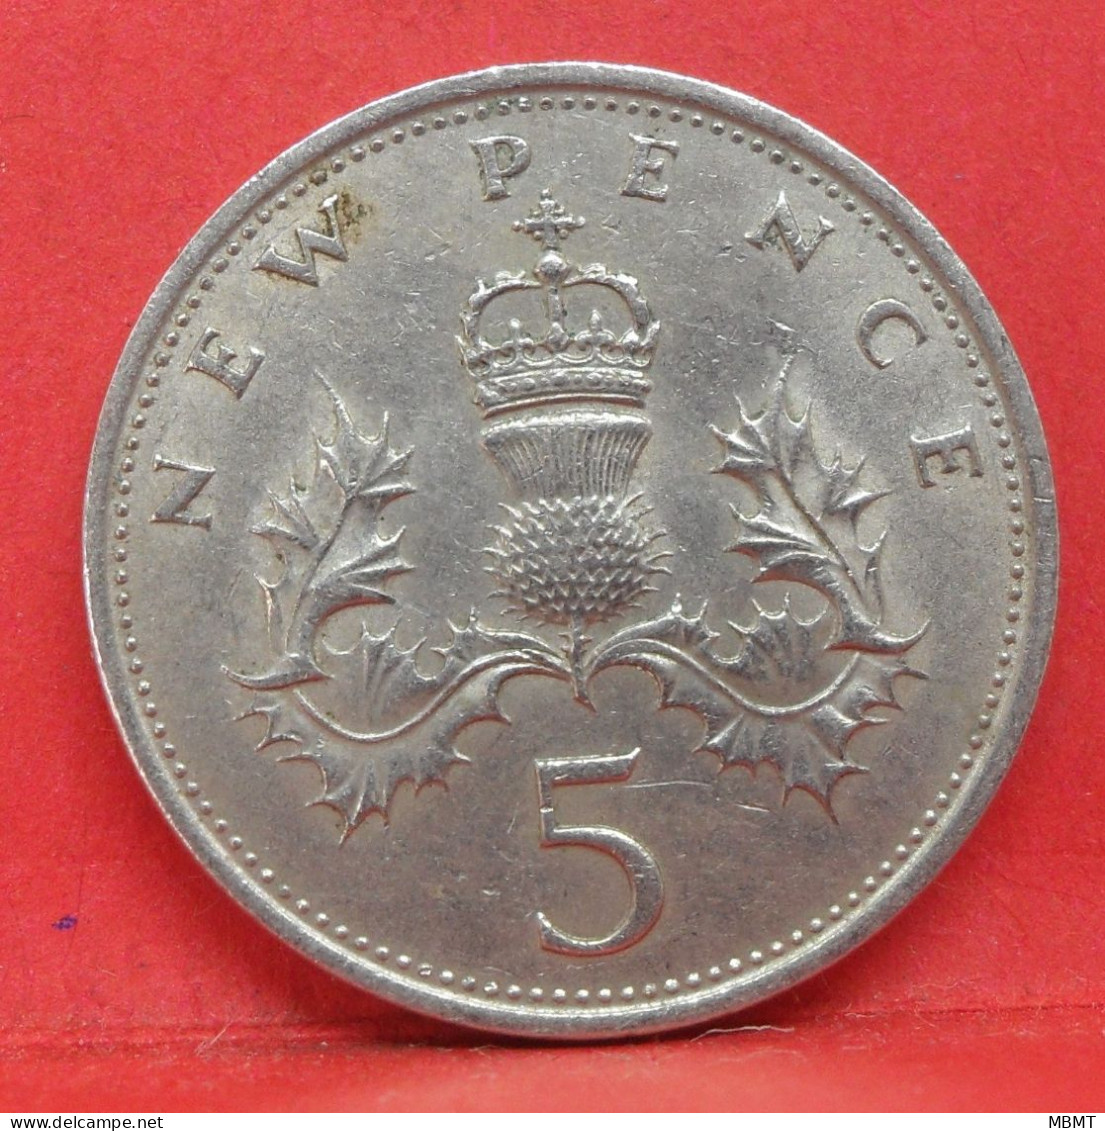 5 Pence 1968 - TTB - Pièce Monnaie Grande-Bretagne - Article N°2760 - 5 Pence & 5 New Pence